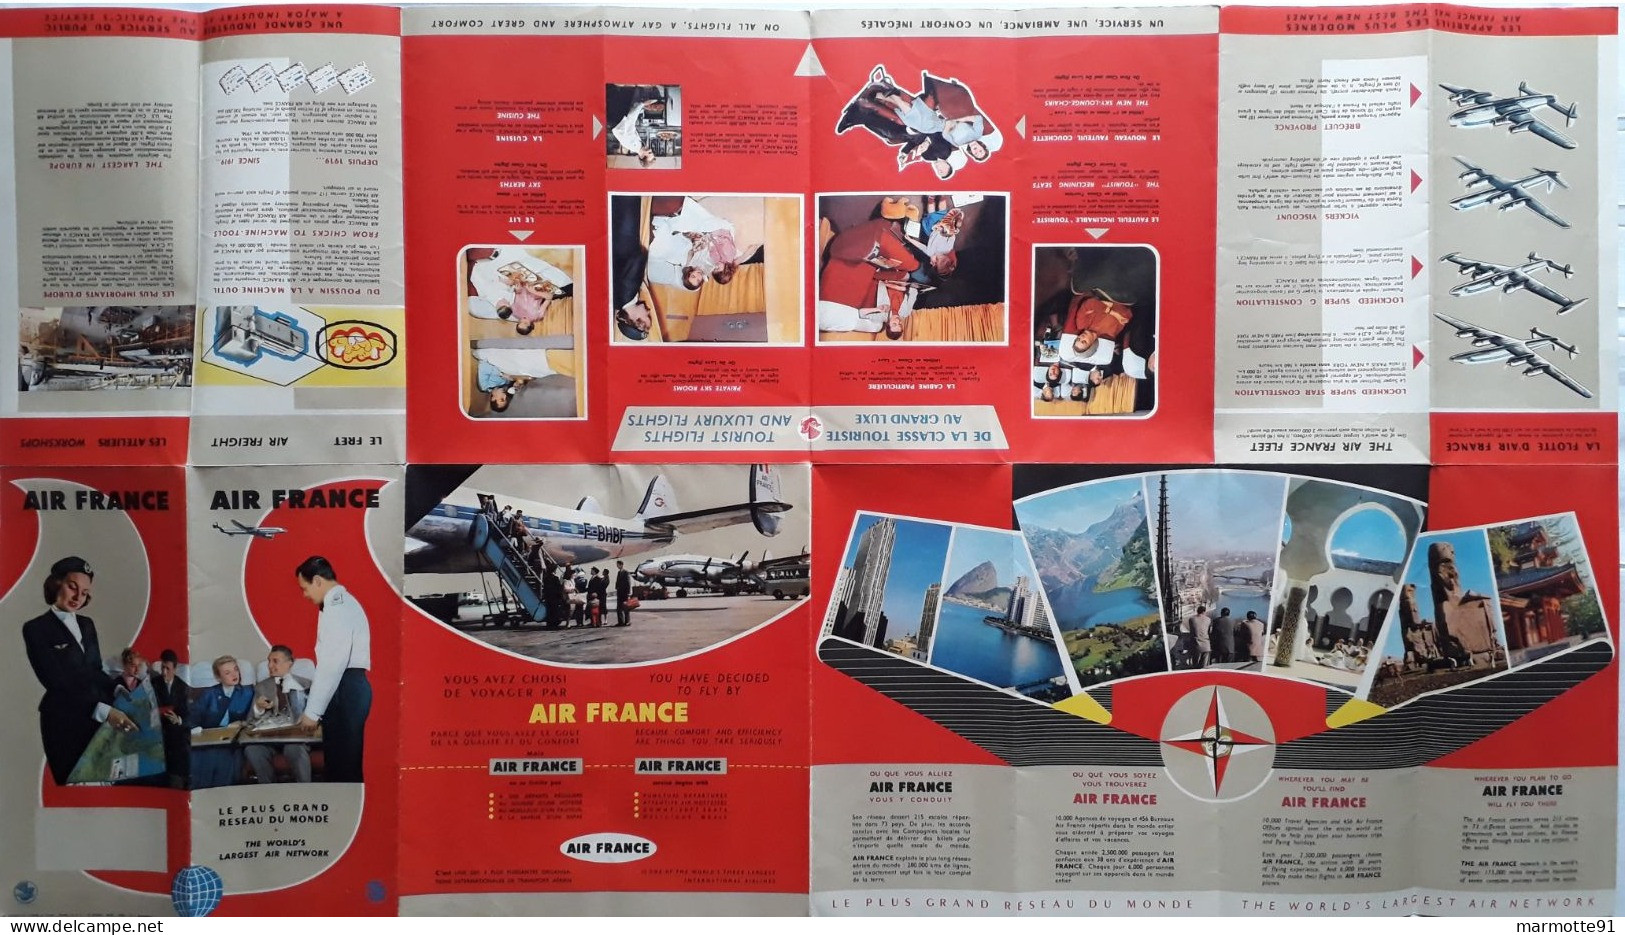 AIR FRANCE CARTE PLUS GRAND RESEAU DU MONDE AVIATION CIVILE 1957 ??? - Poster